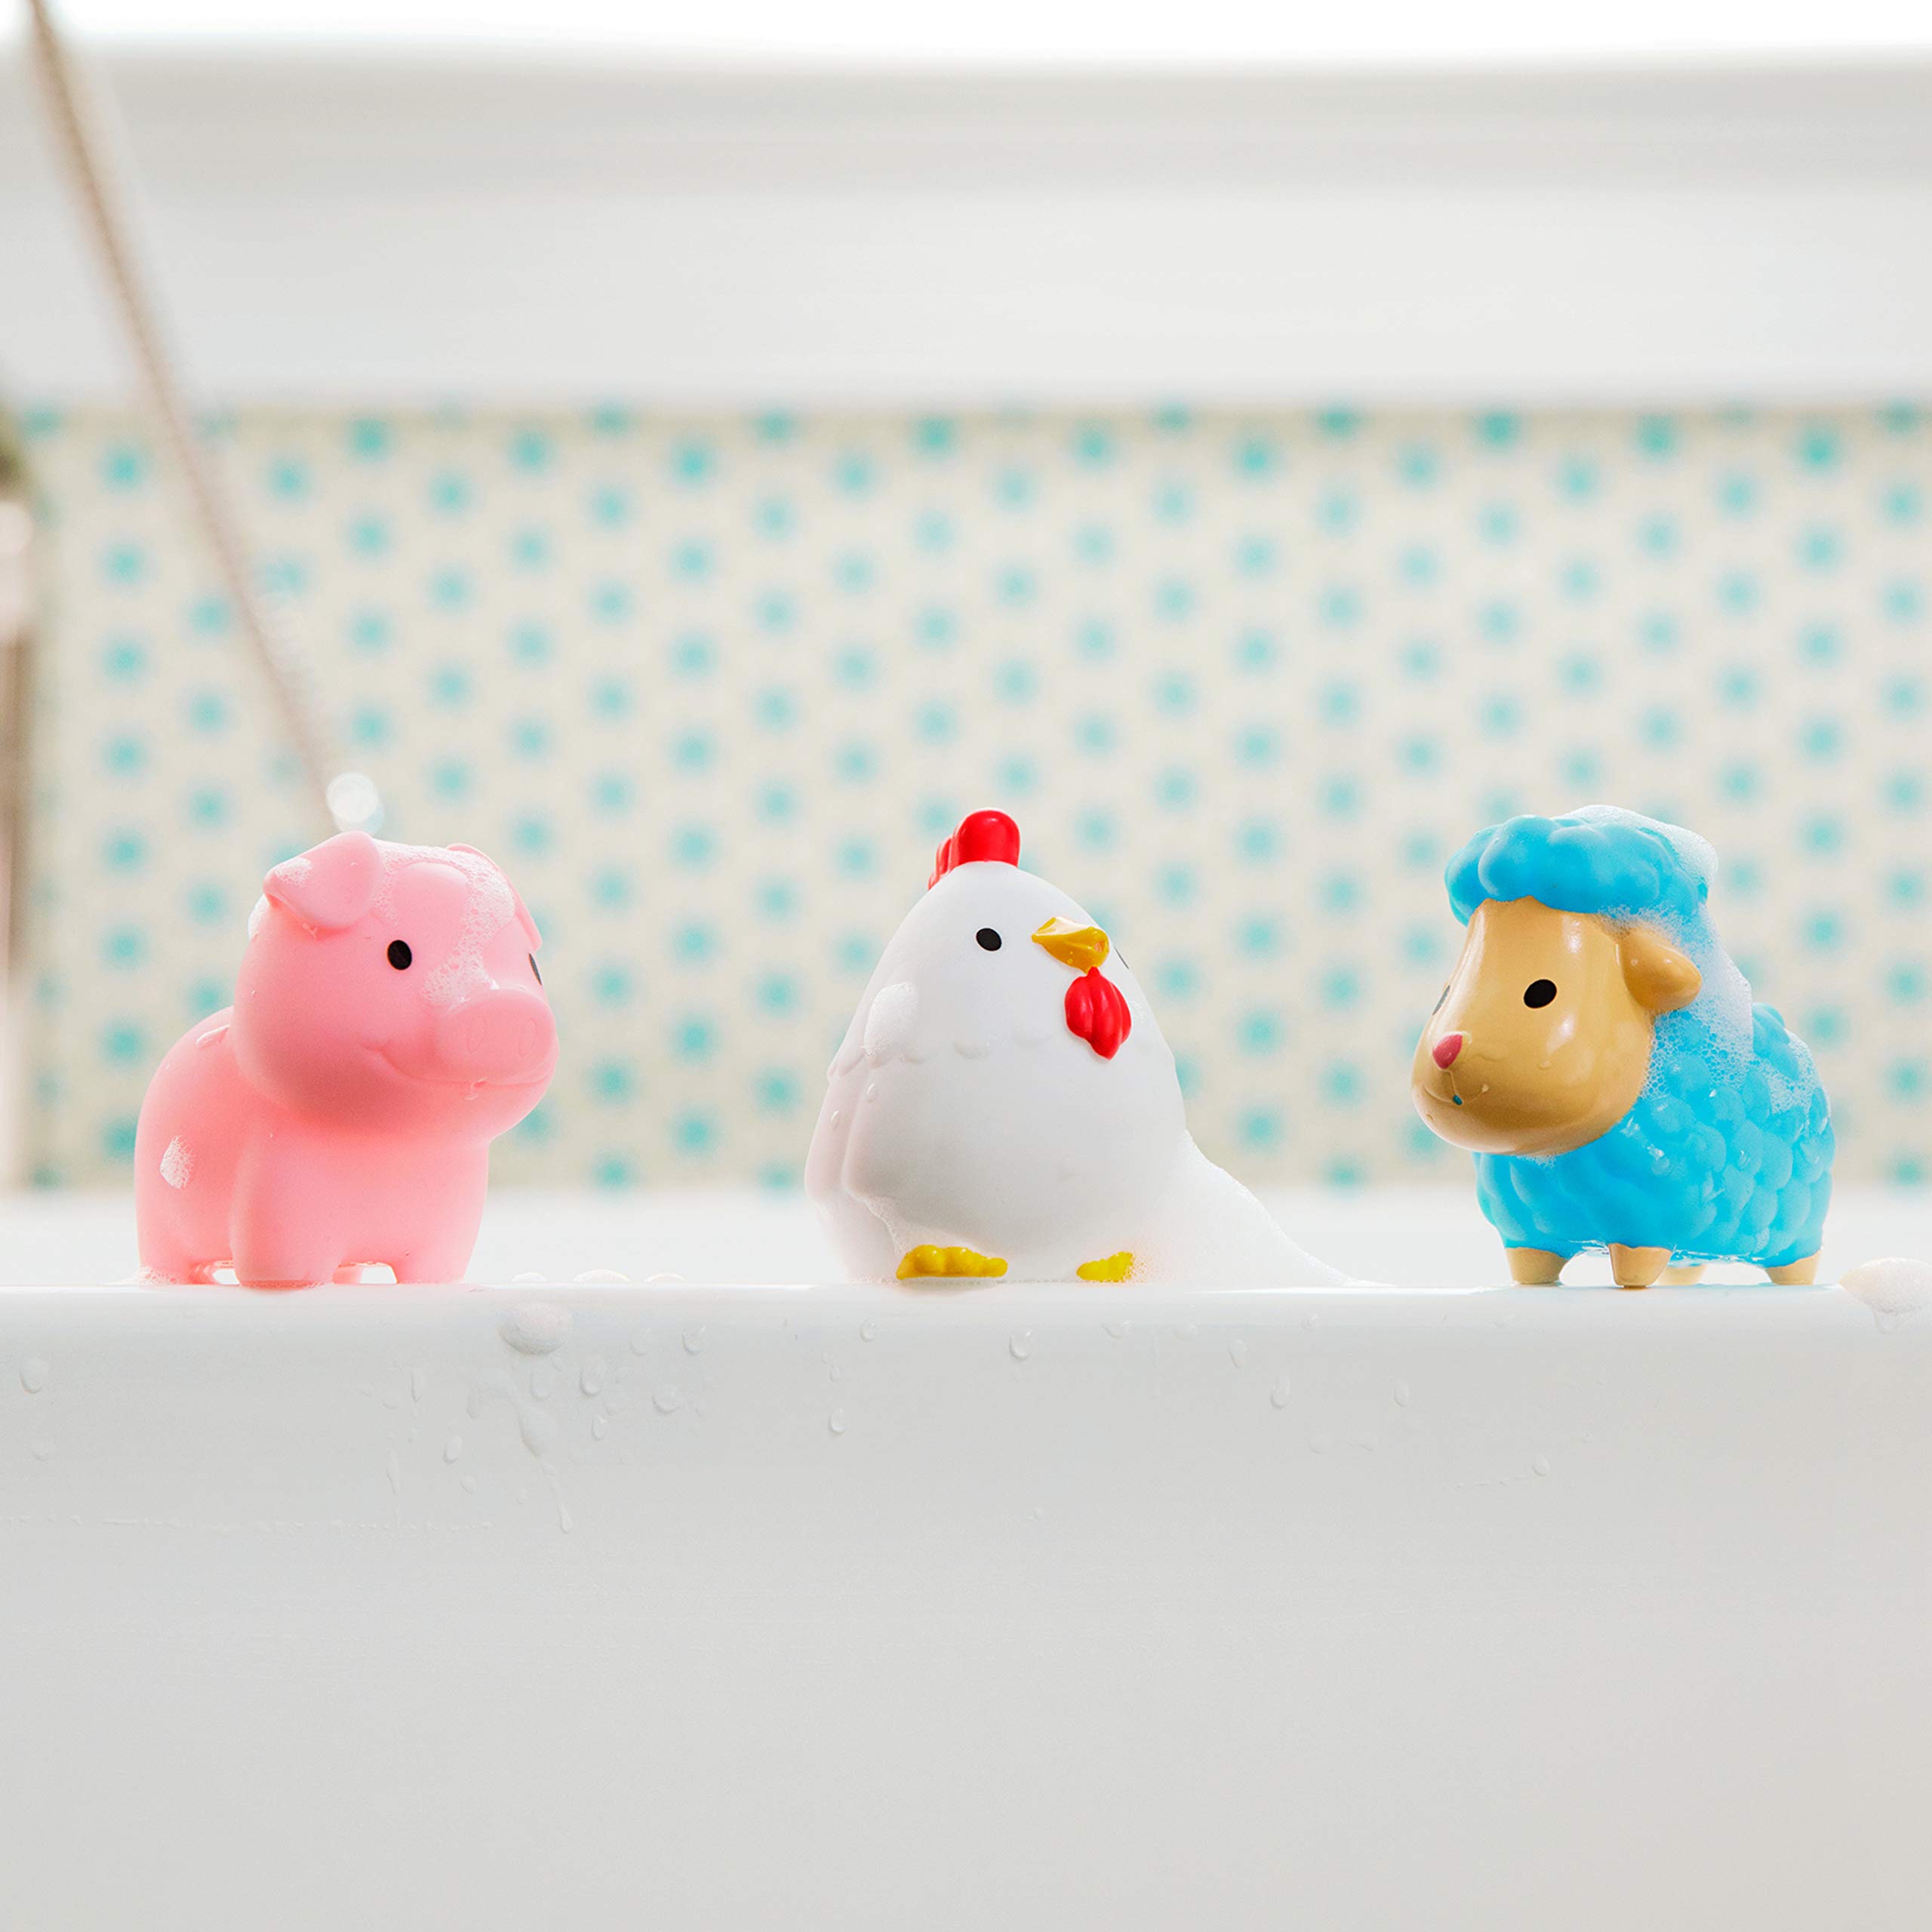 Munchkin® Farm™ Animal Squirts Baby Bath Toy, 4 Pack